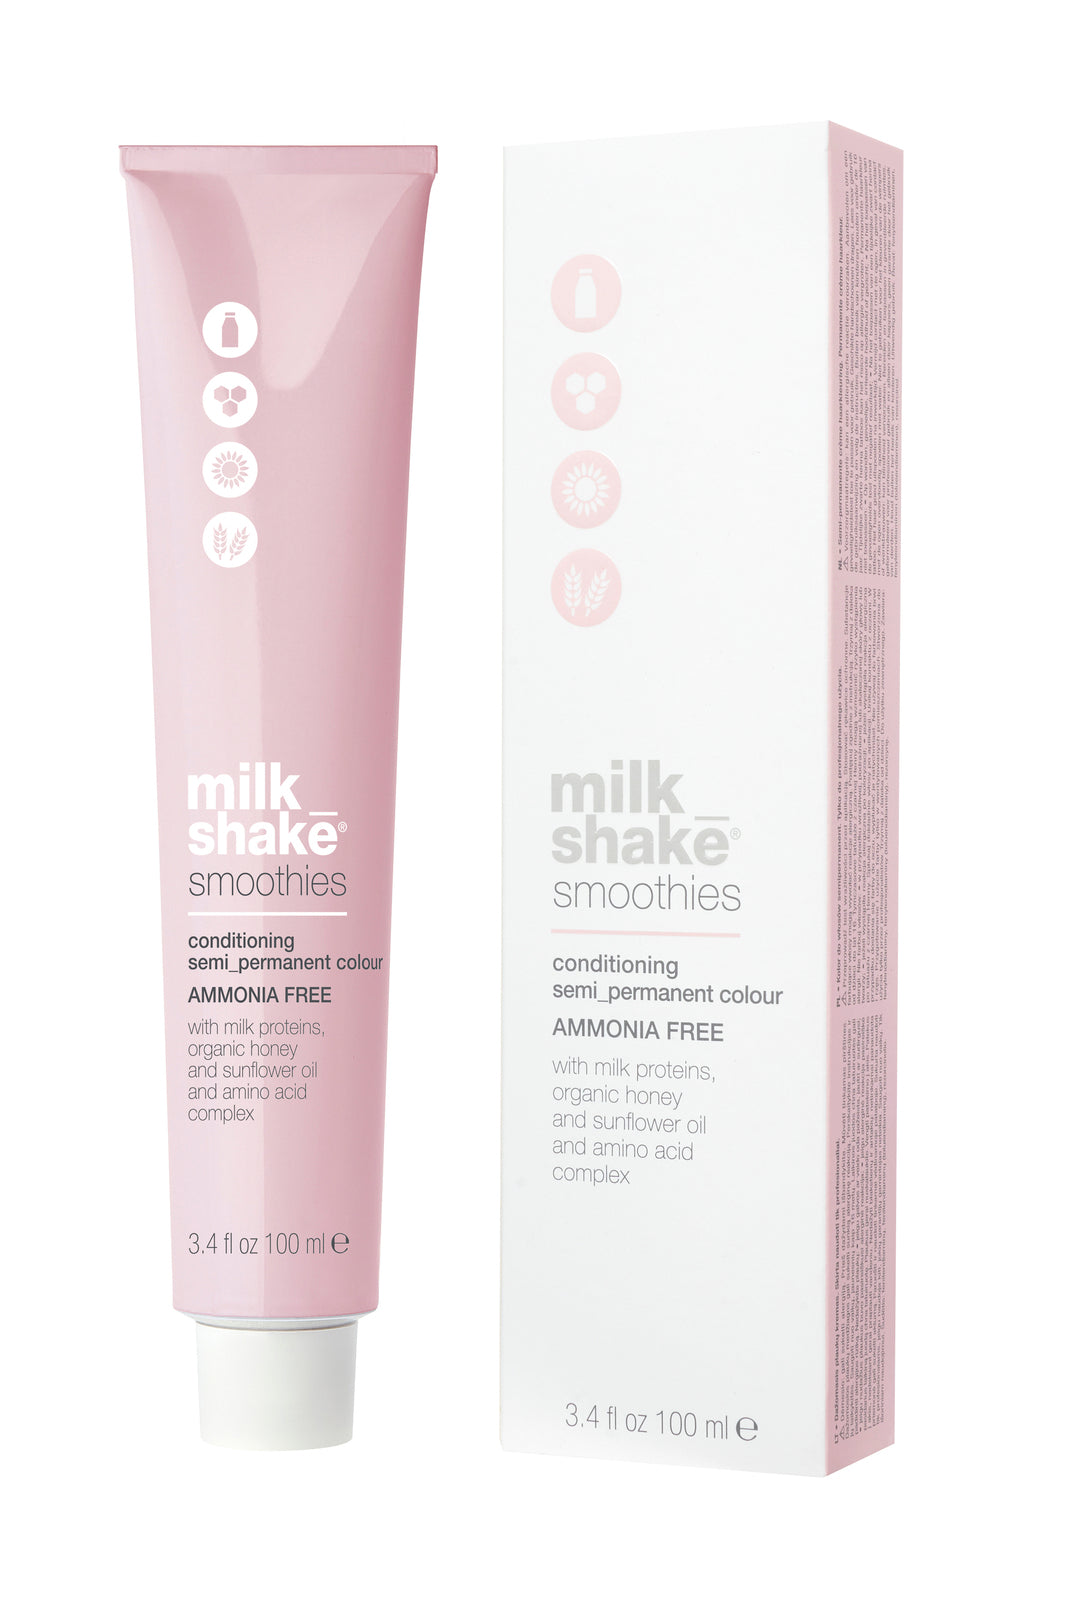 Milkshake smoothies semi-permanent color 6.66